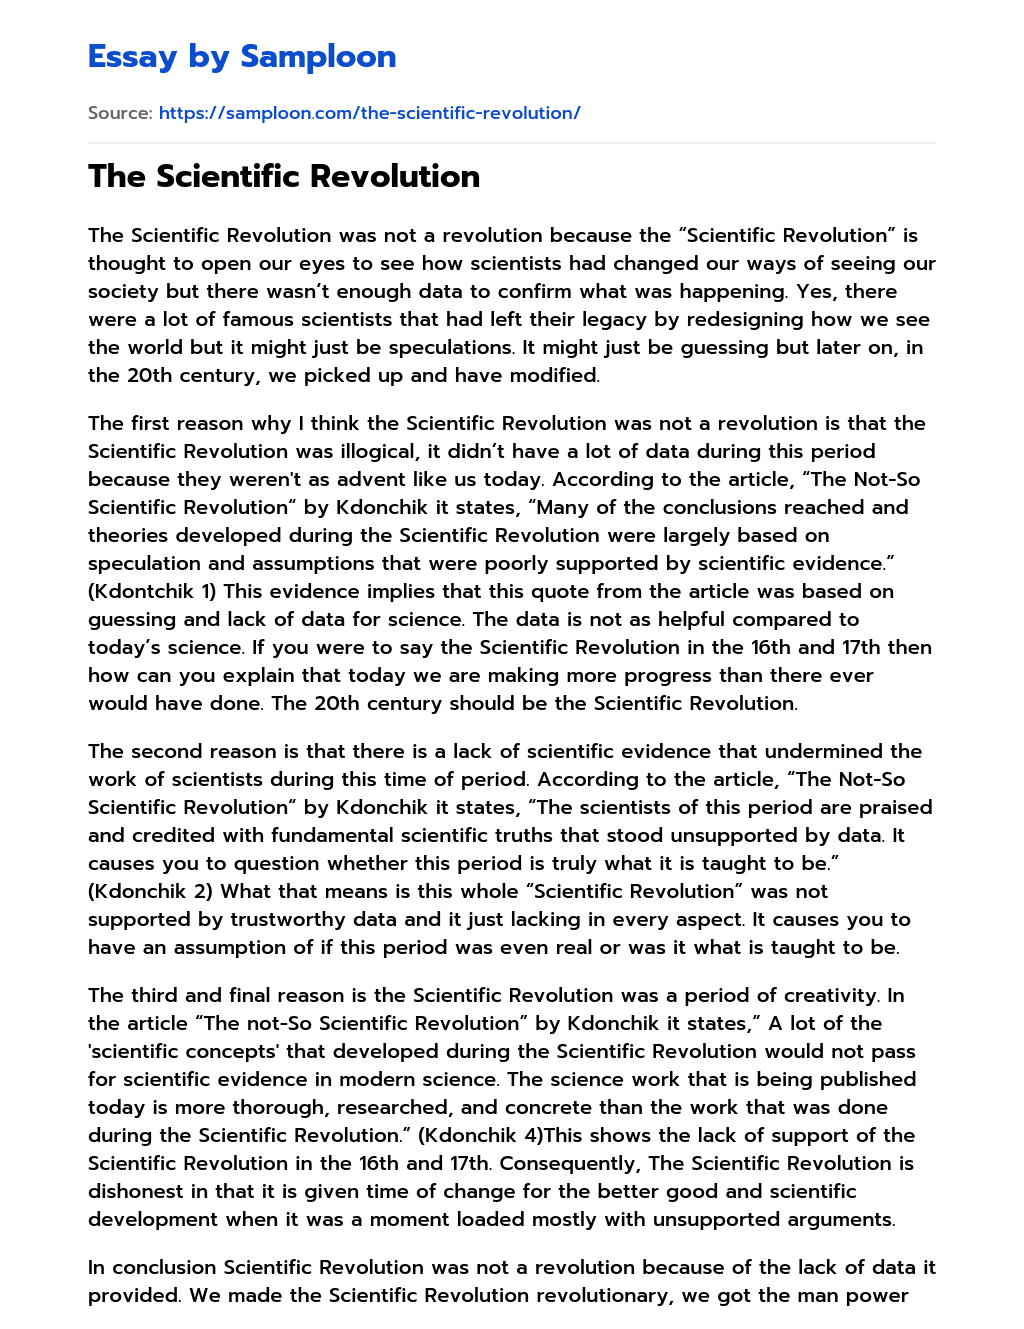 The Scientific Revolution essay